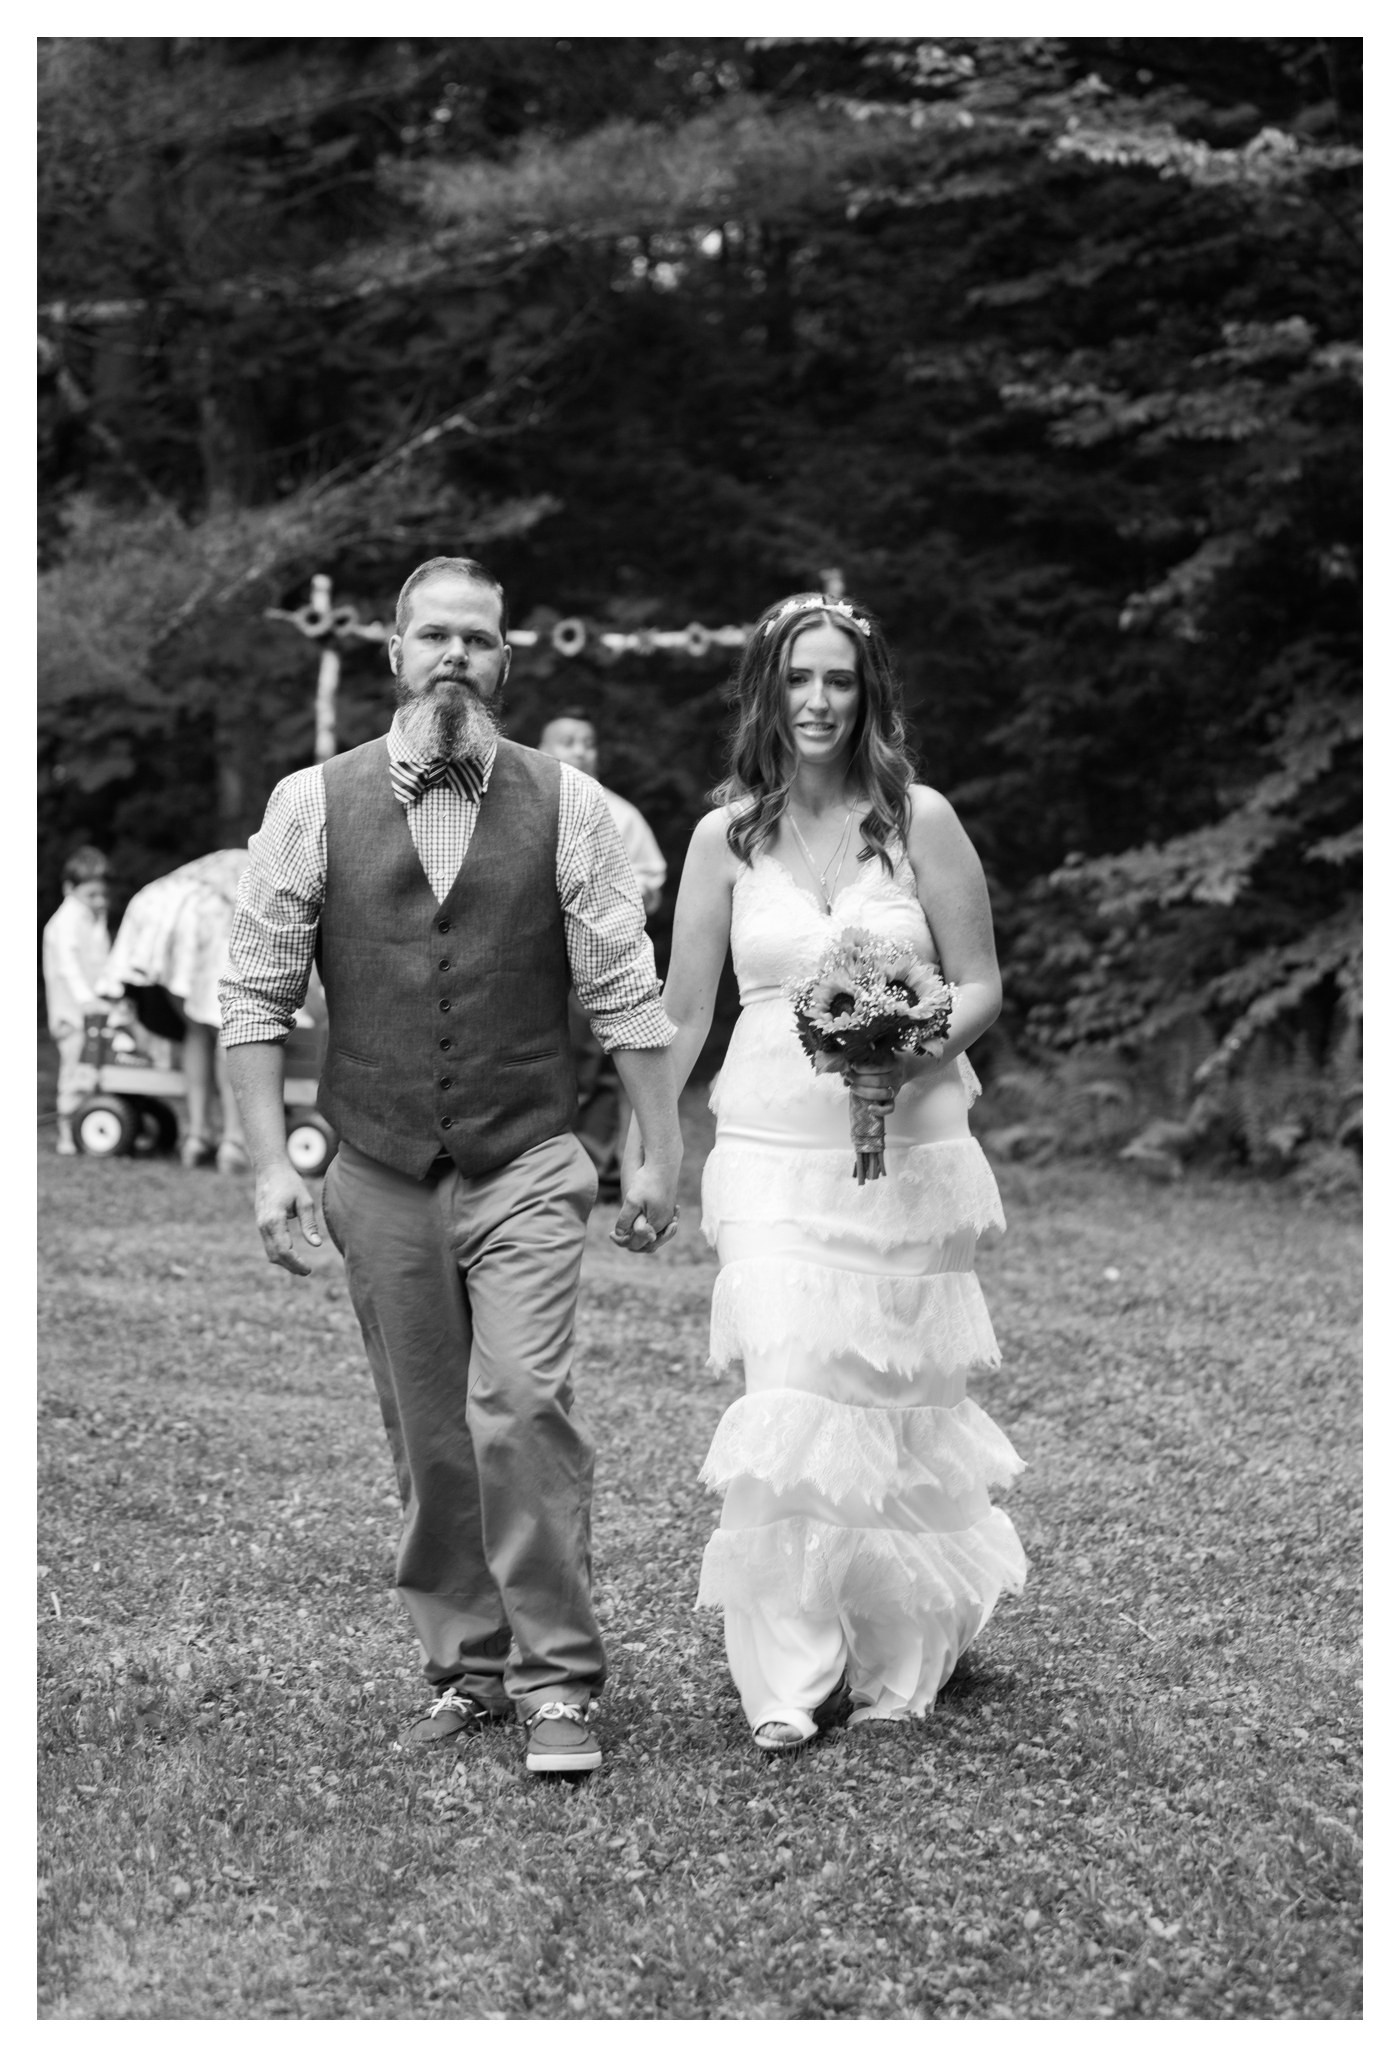 4th of July Backyard Wedding - Alyssa + Mike - Michele Ashley Photography 